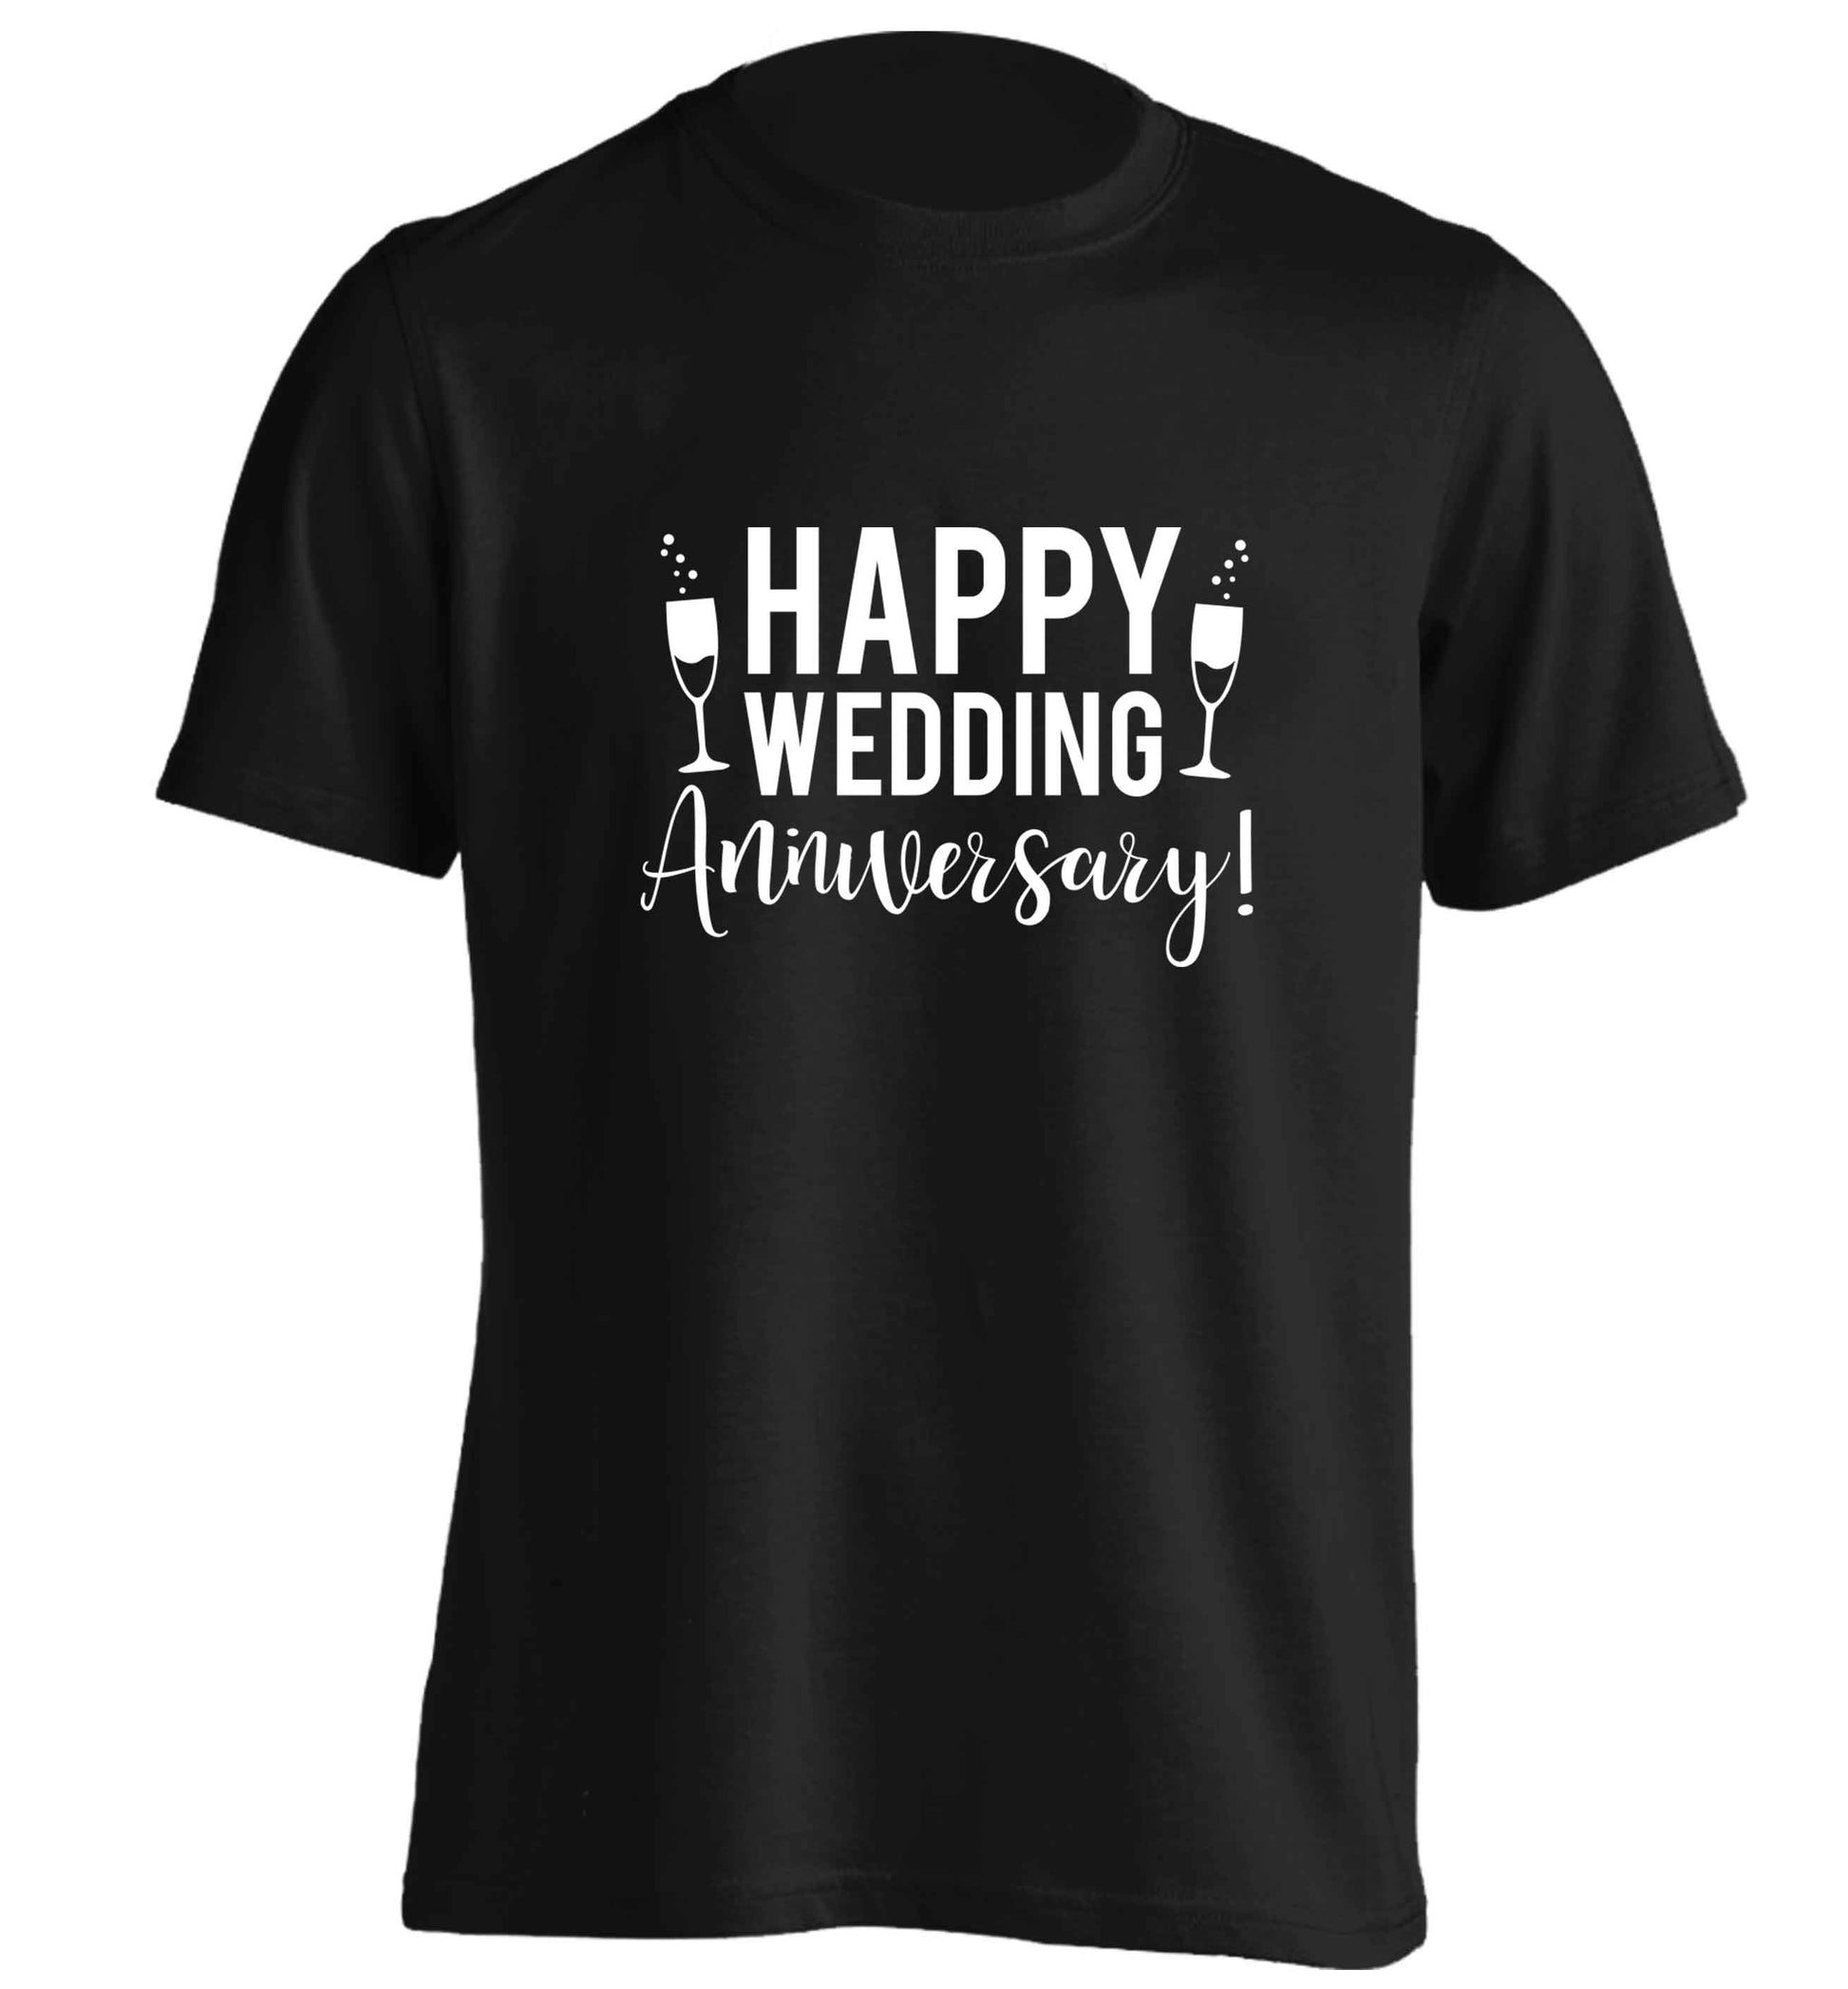 Happy wedding anniversary! adults unisex black Tshirt 2XL